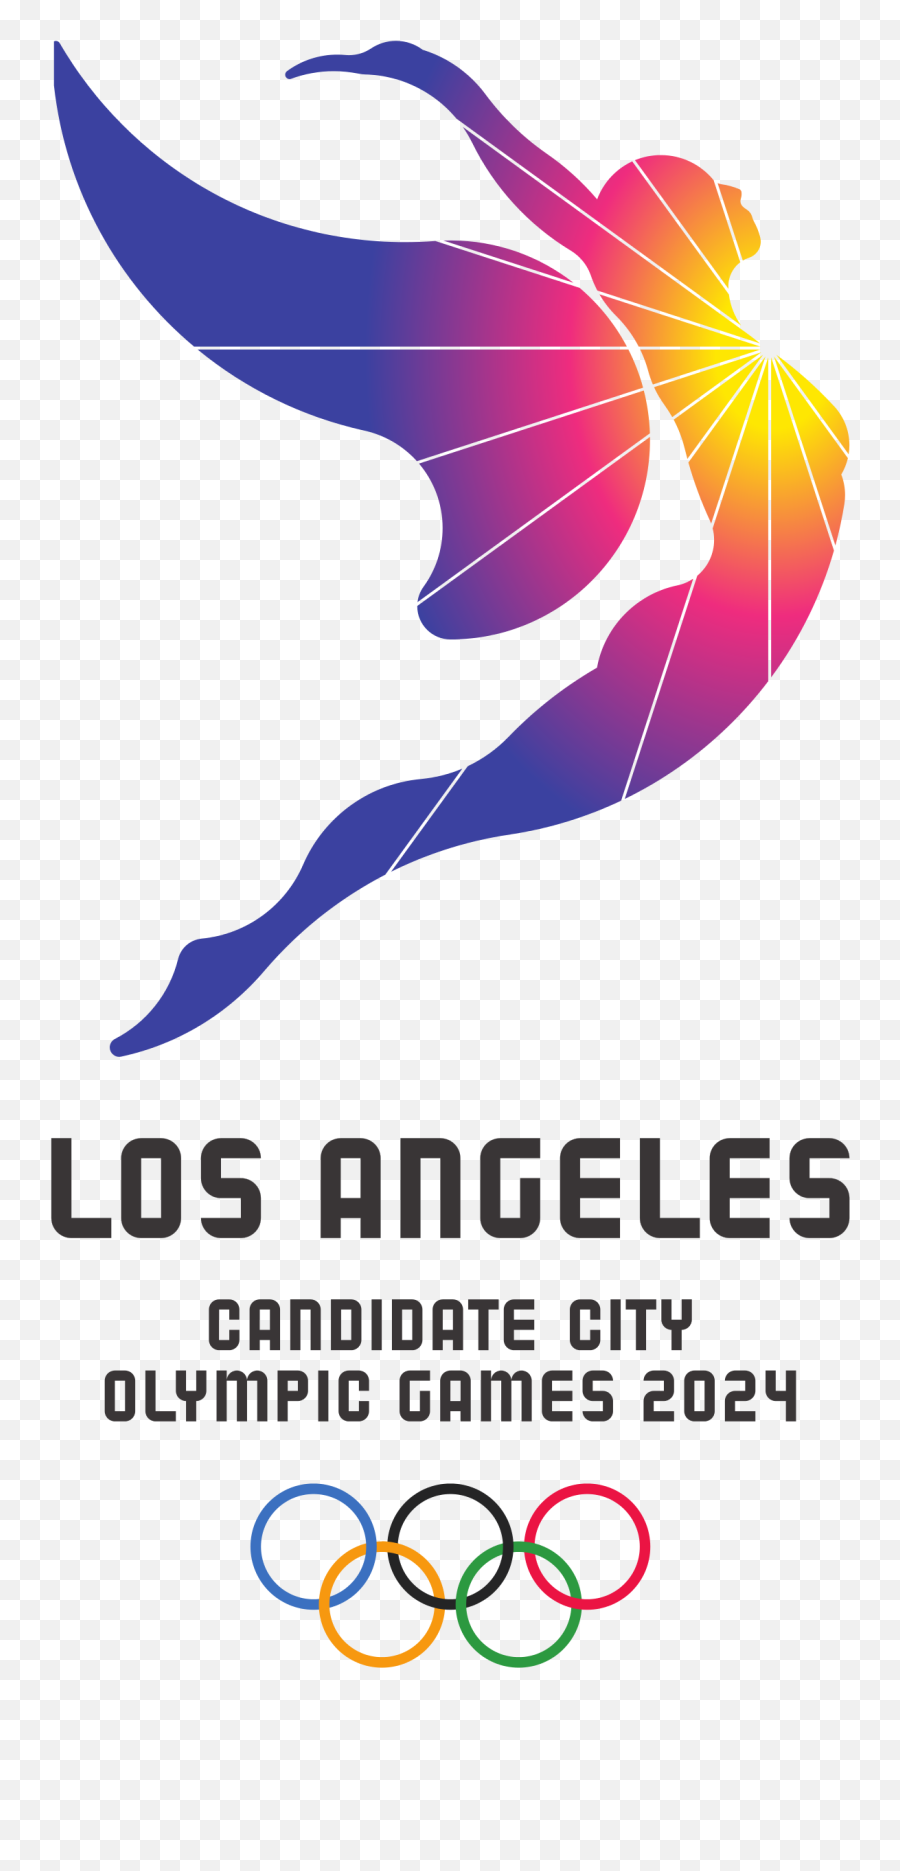 Los Angeles Bid For The 2024 Summer Olympics Wikipedia Los Angeles